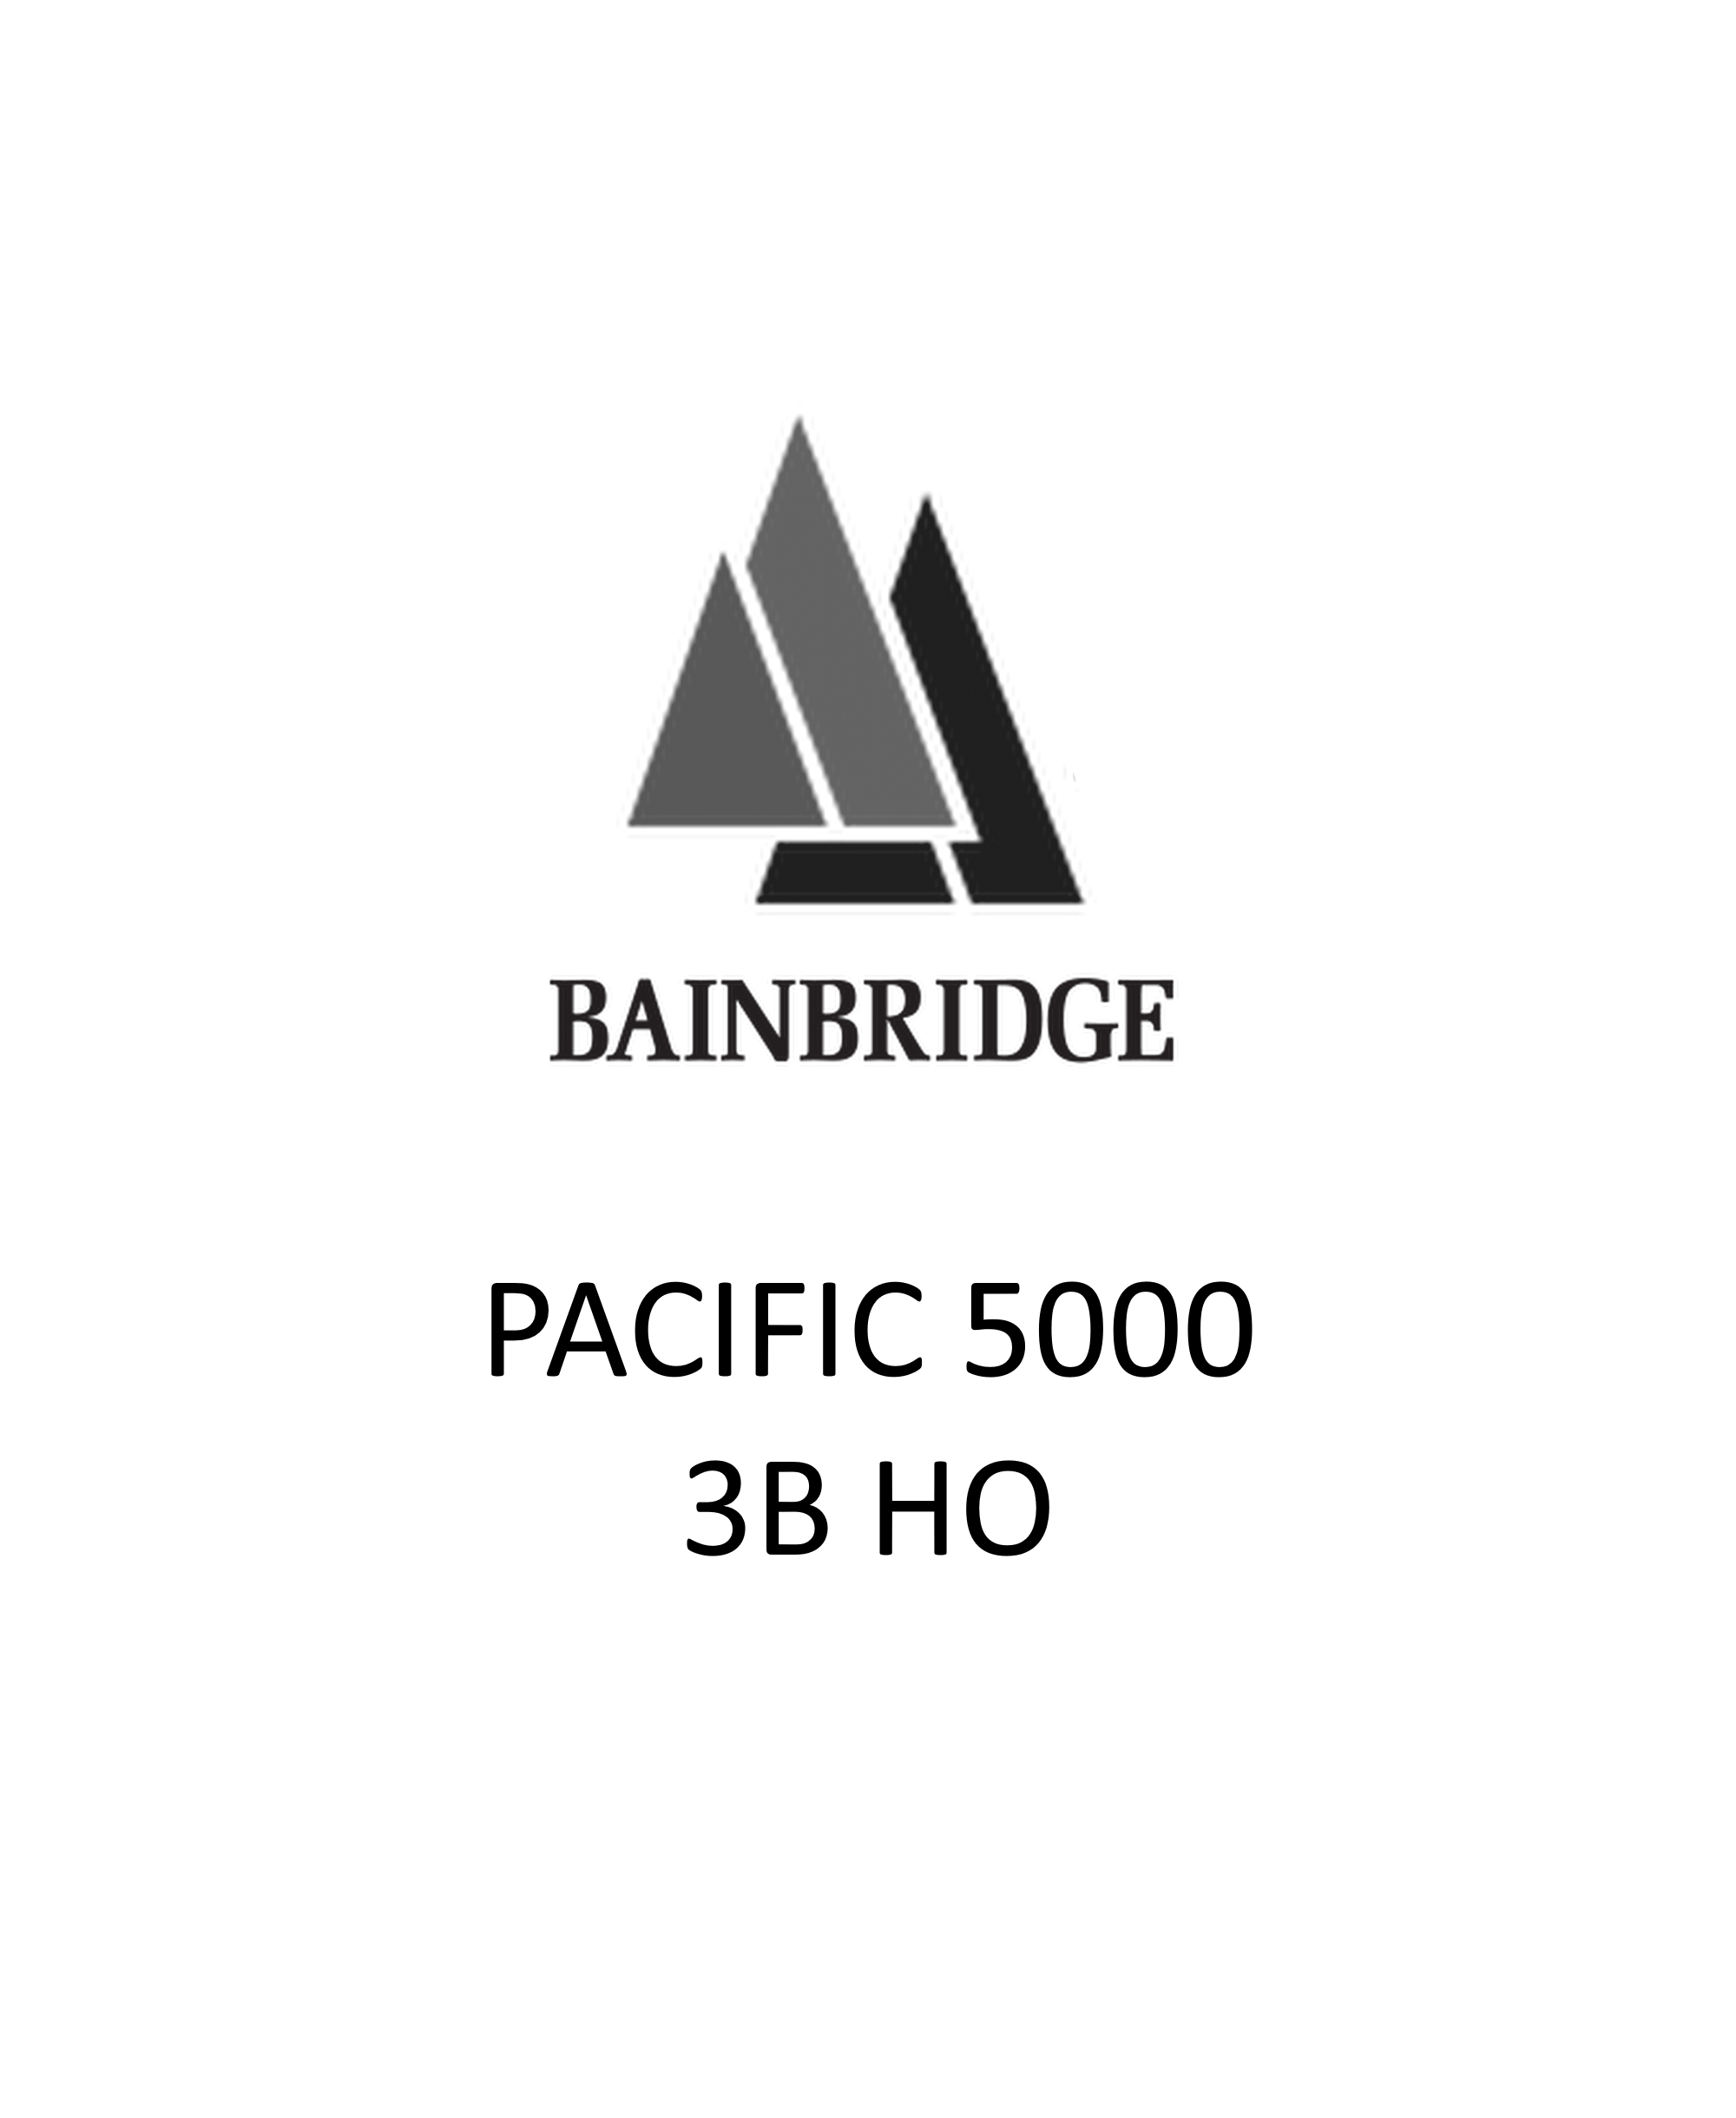 Bainbridge Pacific 5000 3B HO 3-Burner-Hob-Oven - All Spares